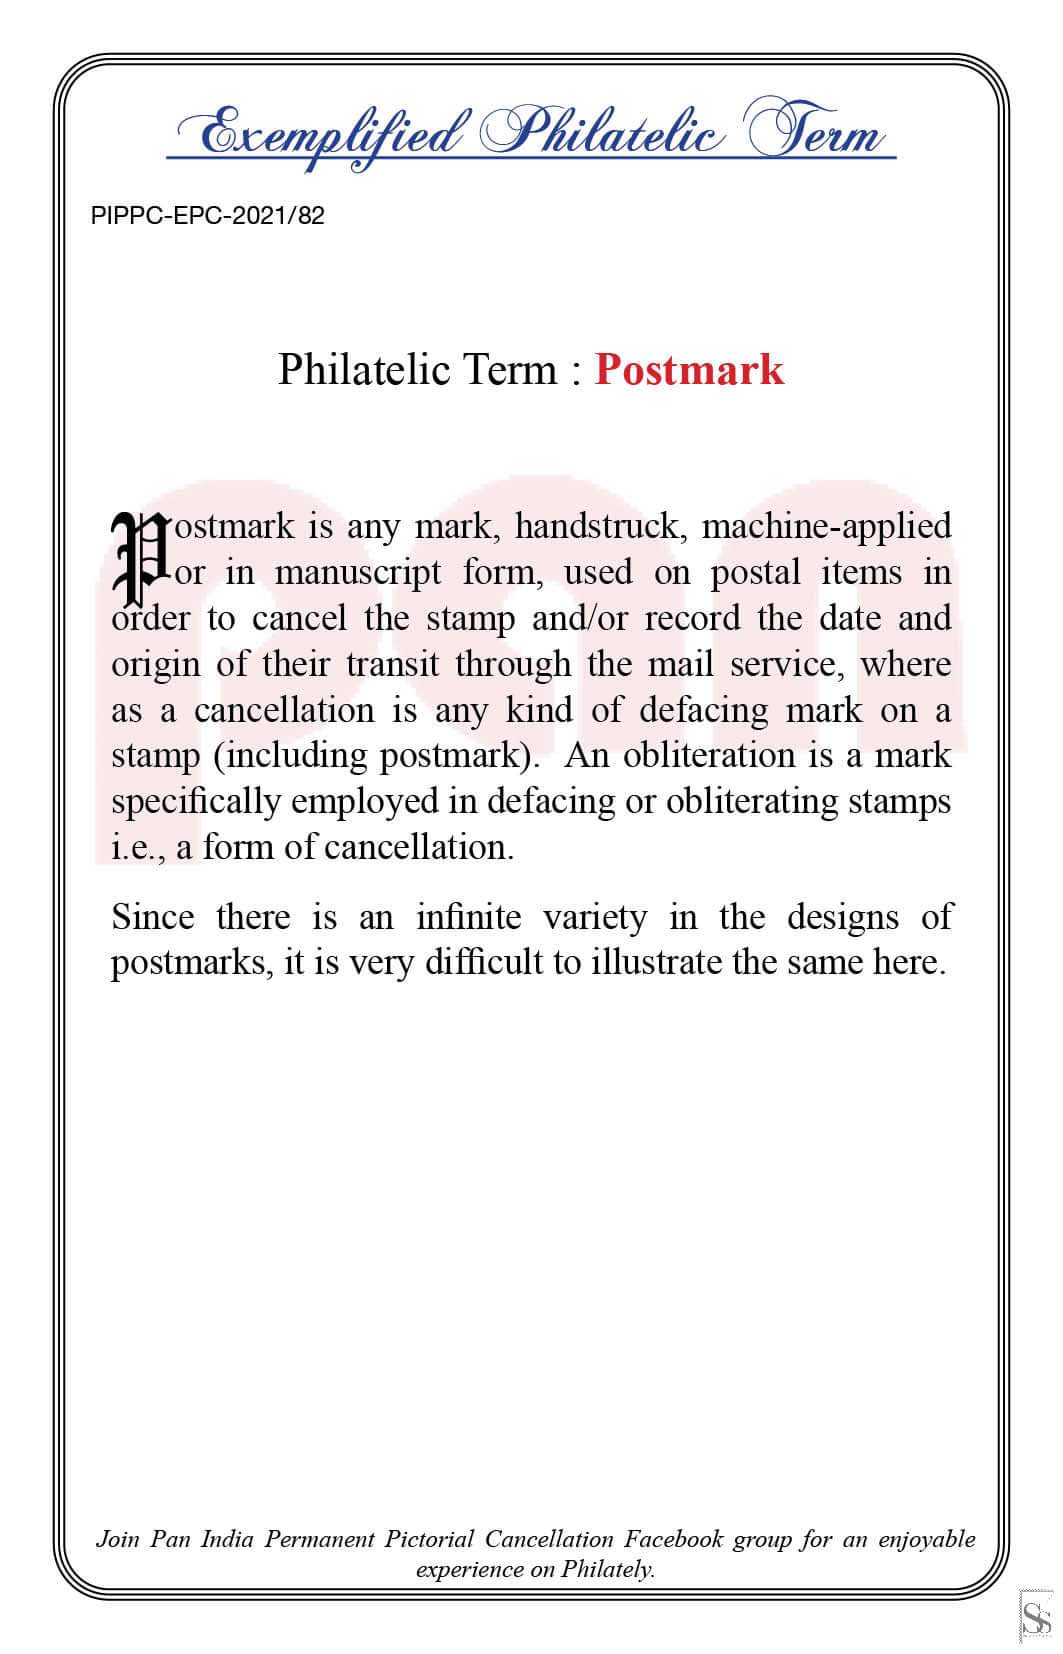 82. Today's Exemplified Philatelic term-Postmark